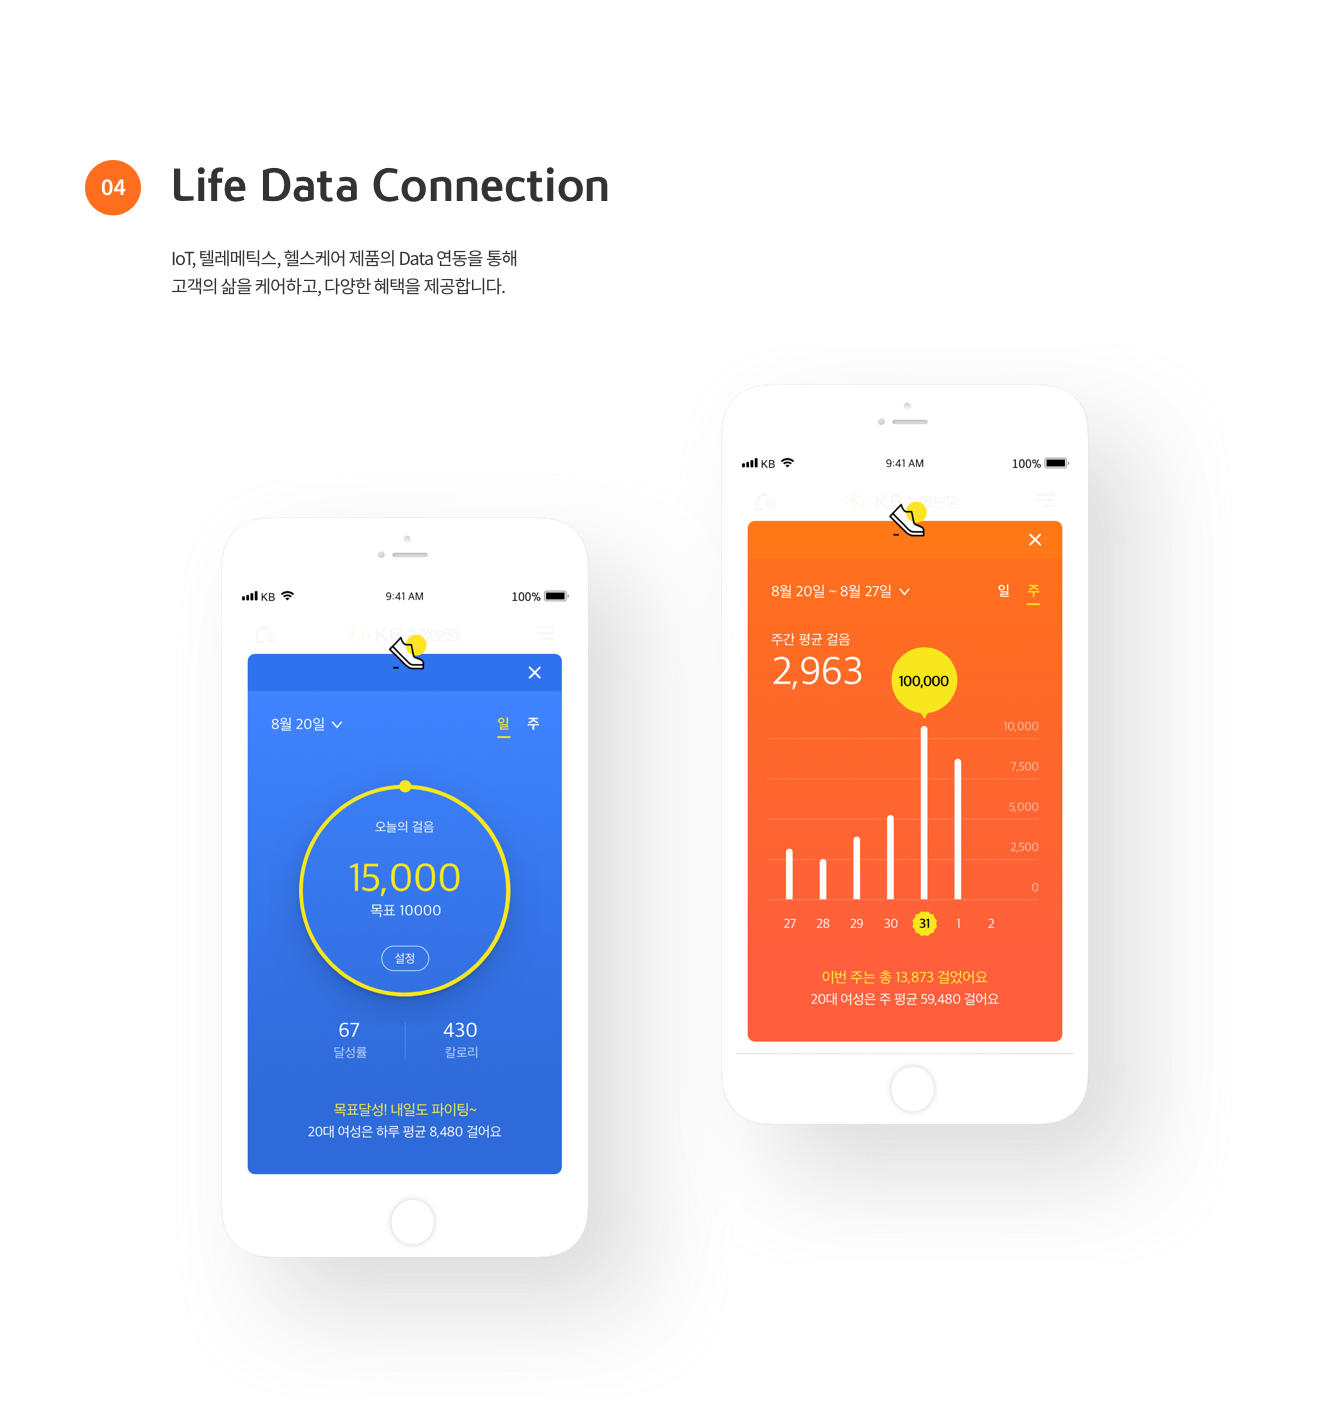 04 Life Data Connection IoT, 텔레메틱스, 헬스케어 제품의 Data 연동을 통해 고객의 삶을 케어하고, 다양한 혜택을 제공합니다.